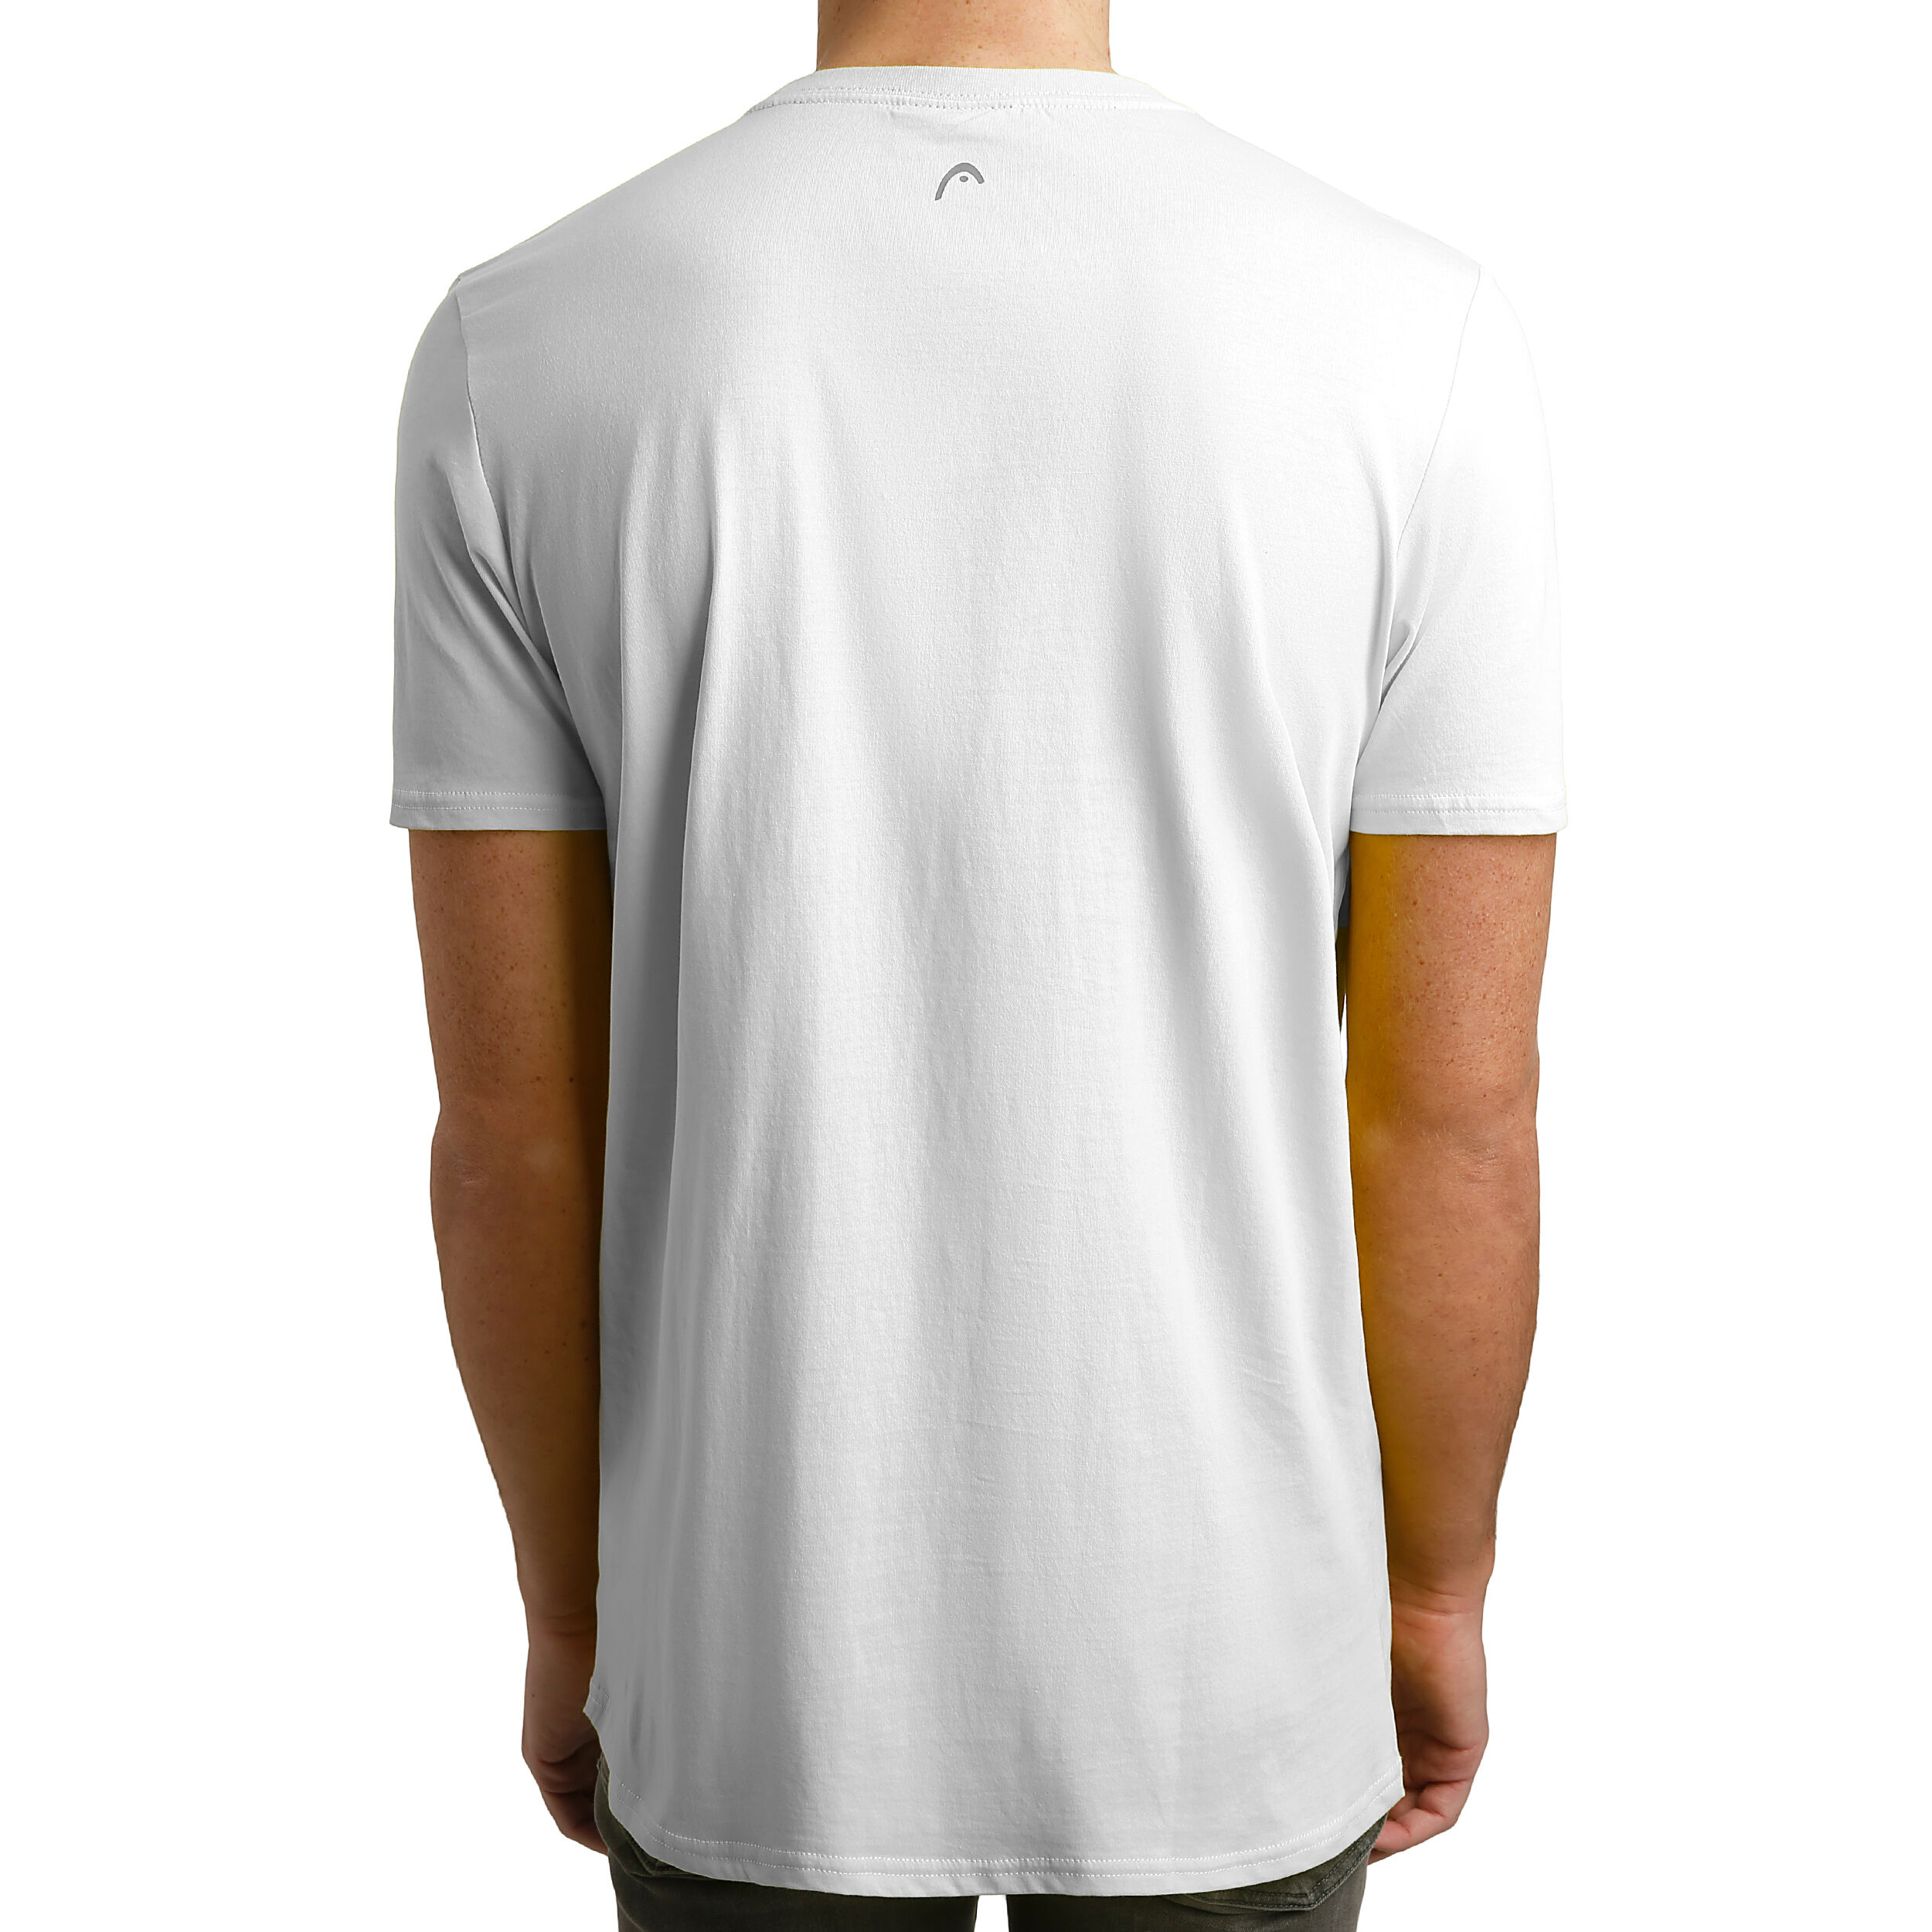 HEAD Men's Club Ivan T-Shirt M T_Shirts